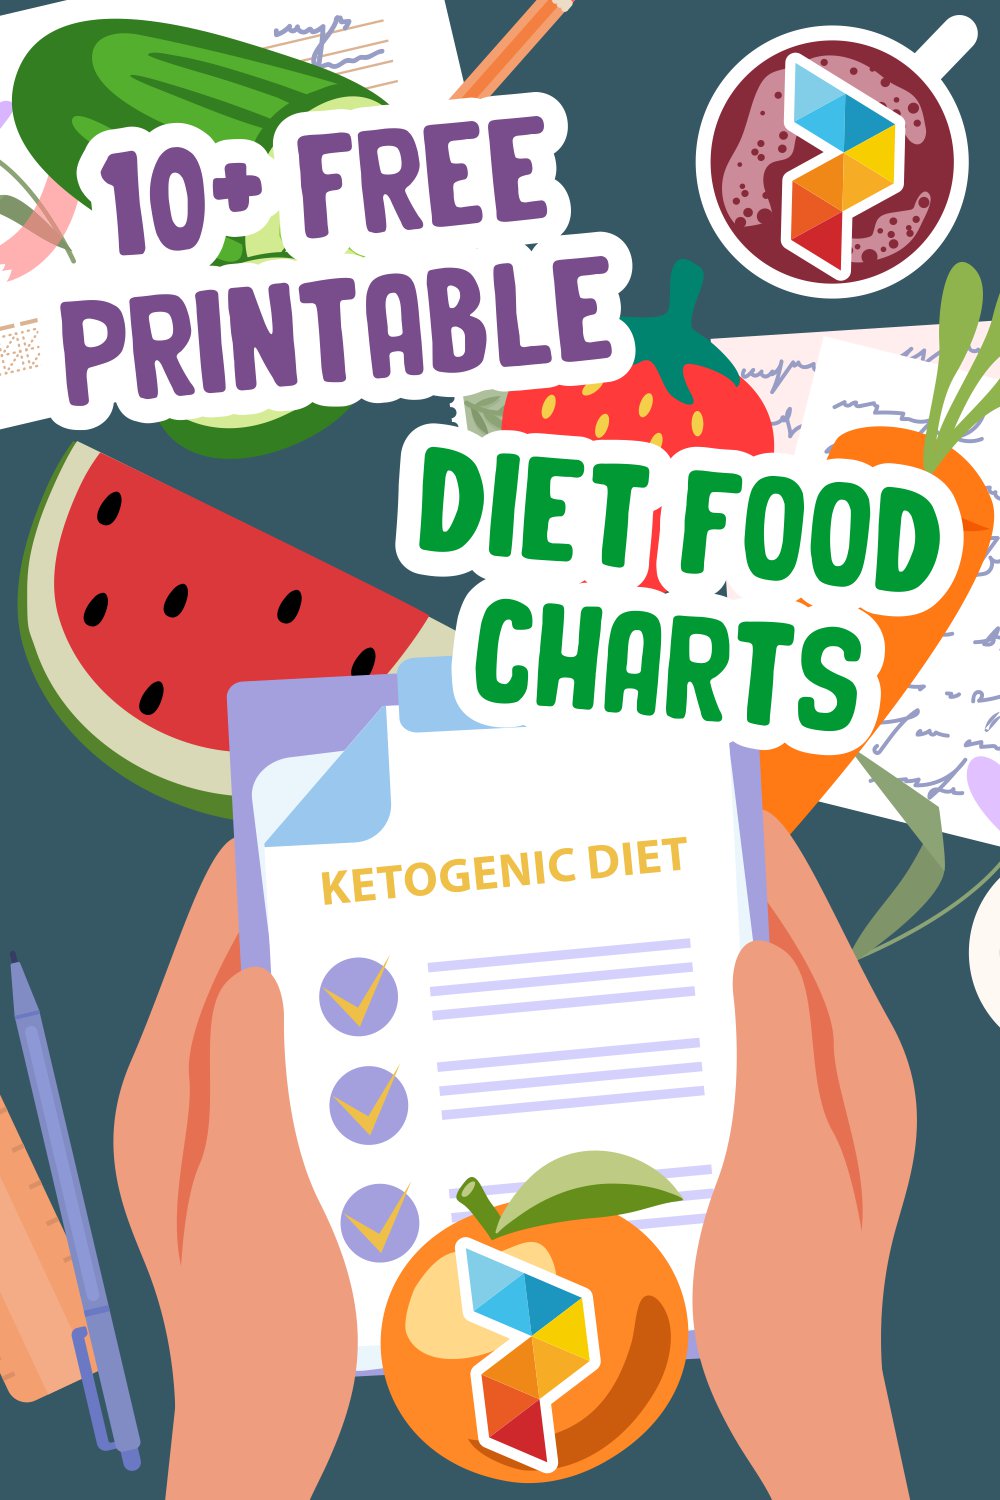 Diet Food Charts